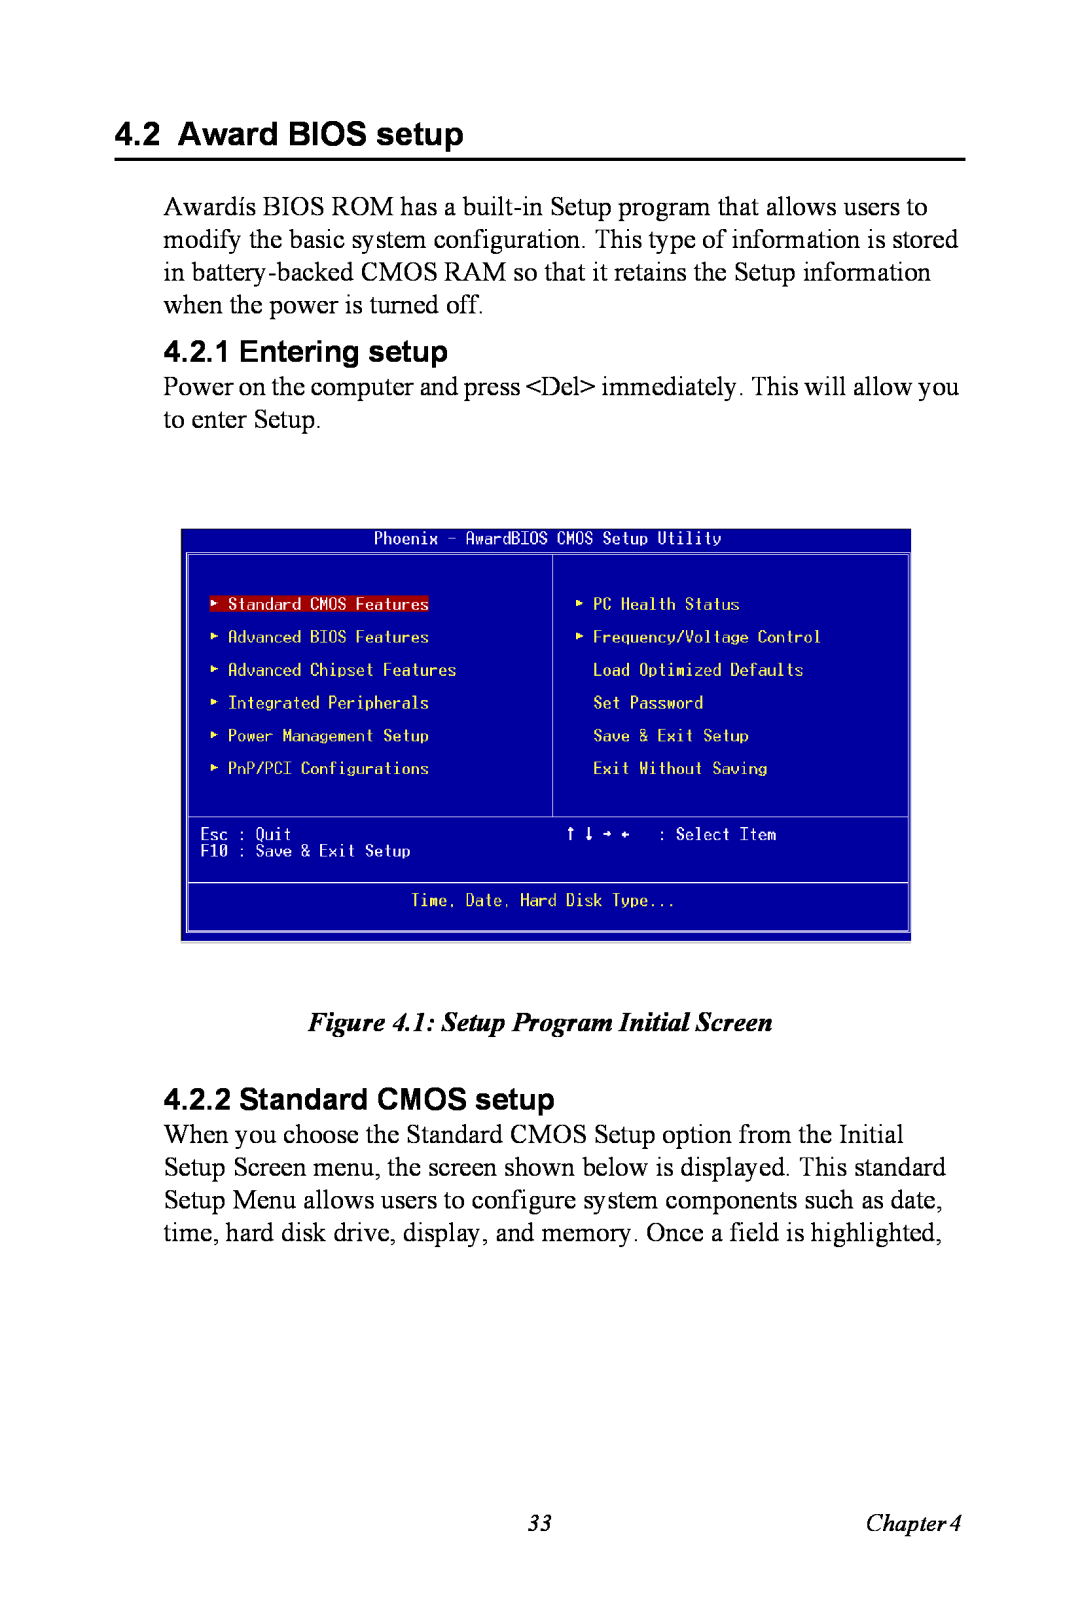 Intel PCM-3370 user manual Award BIOS setup, Entering setup, Standard CMOS setup, 1 Setup Program Initial Screen 